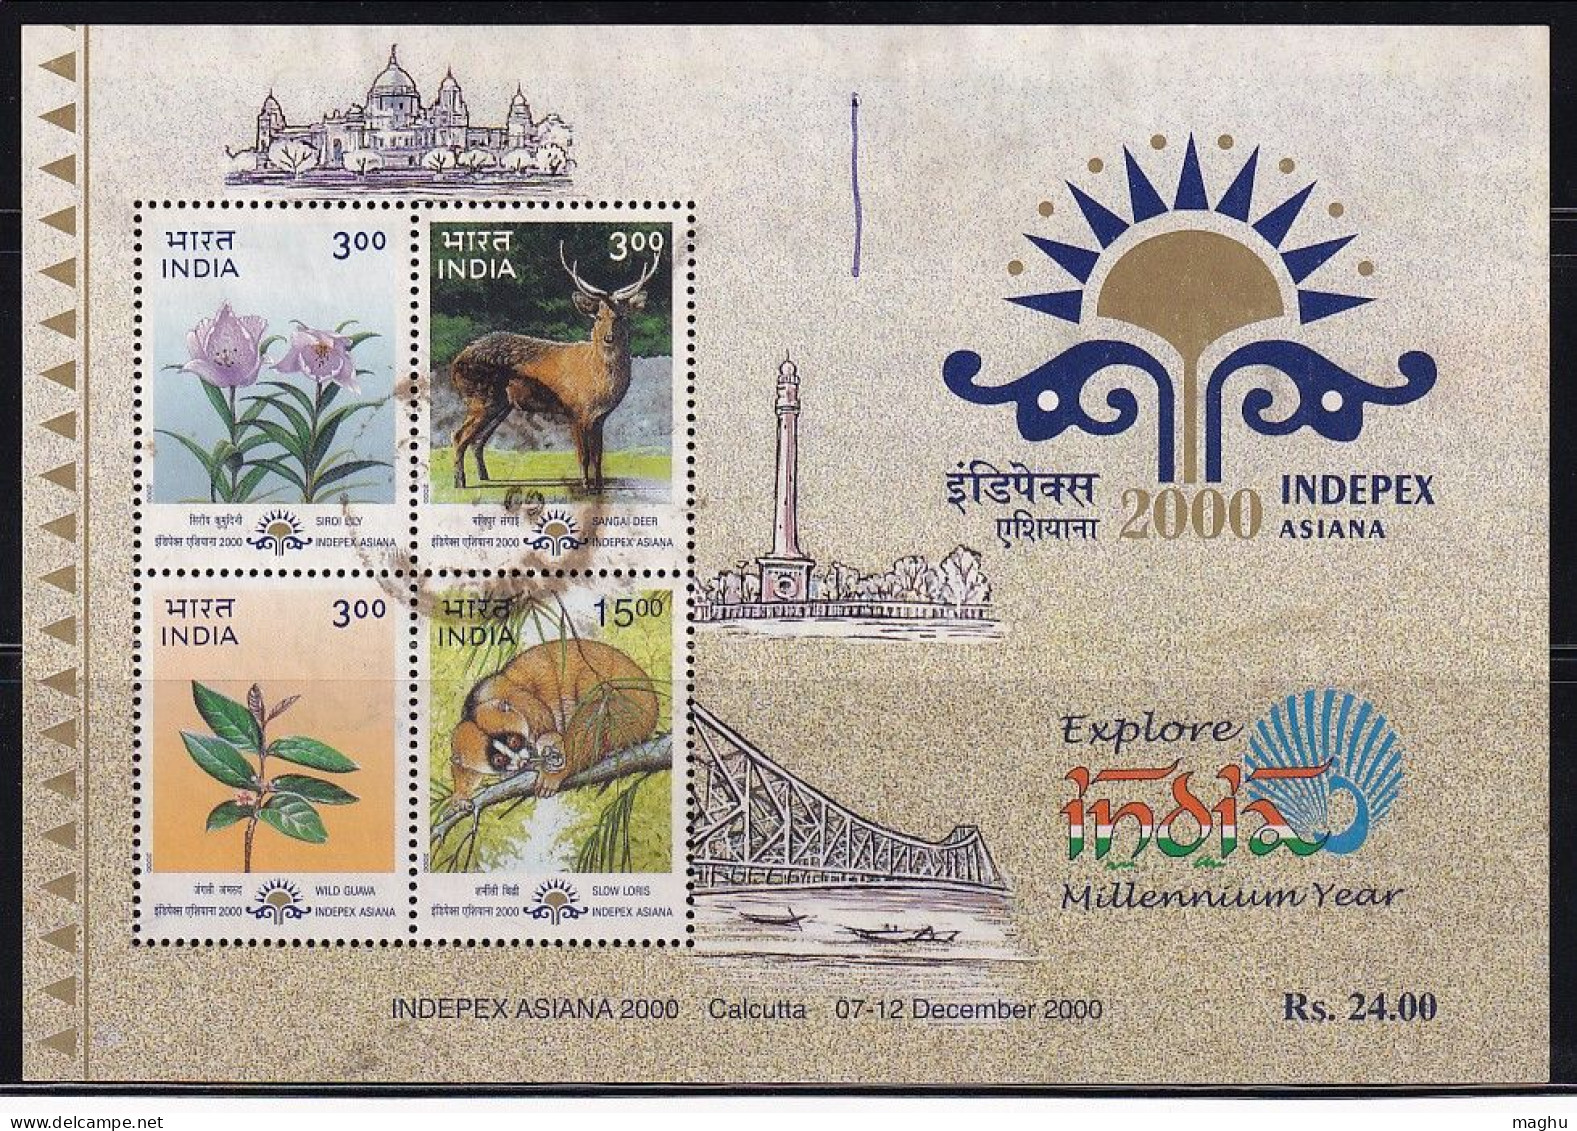 Postal Used India Miniature 2000, INDEPEX ASIANA, Lily Flower, Deer, Guave, Snow Loris, Animal, Bridge, Millenium - Usados